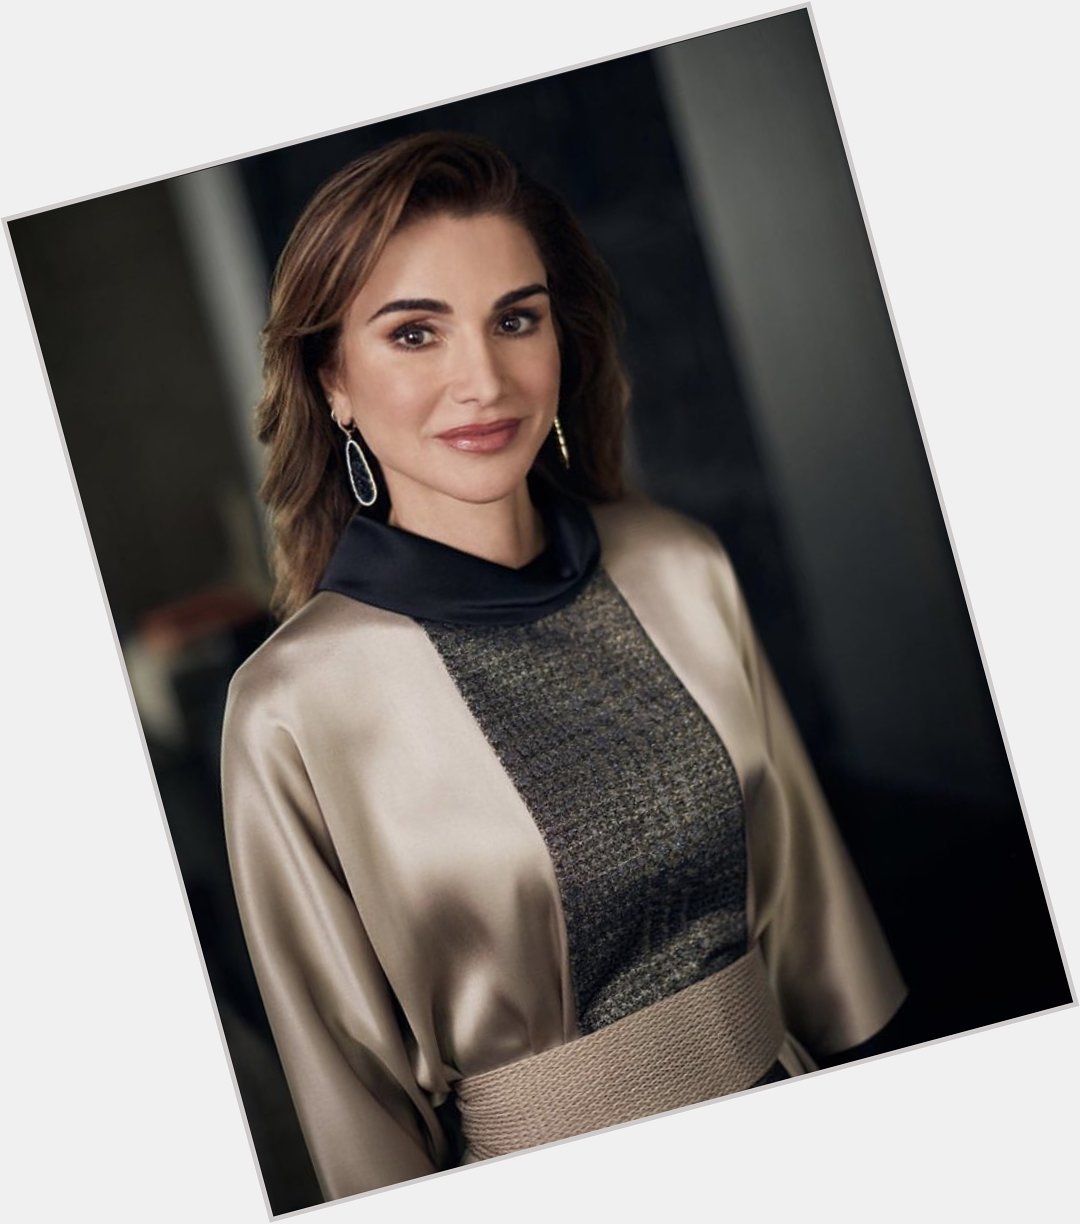 Happy 50th Birthday to Queen Rania of Jordan, wife of King Abdullah II. 